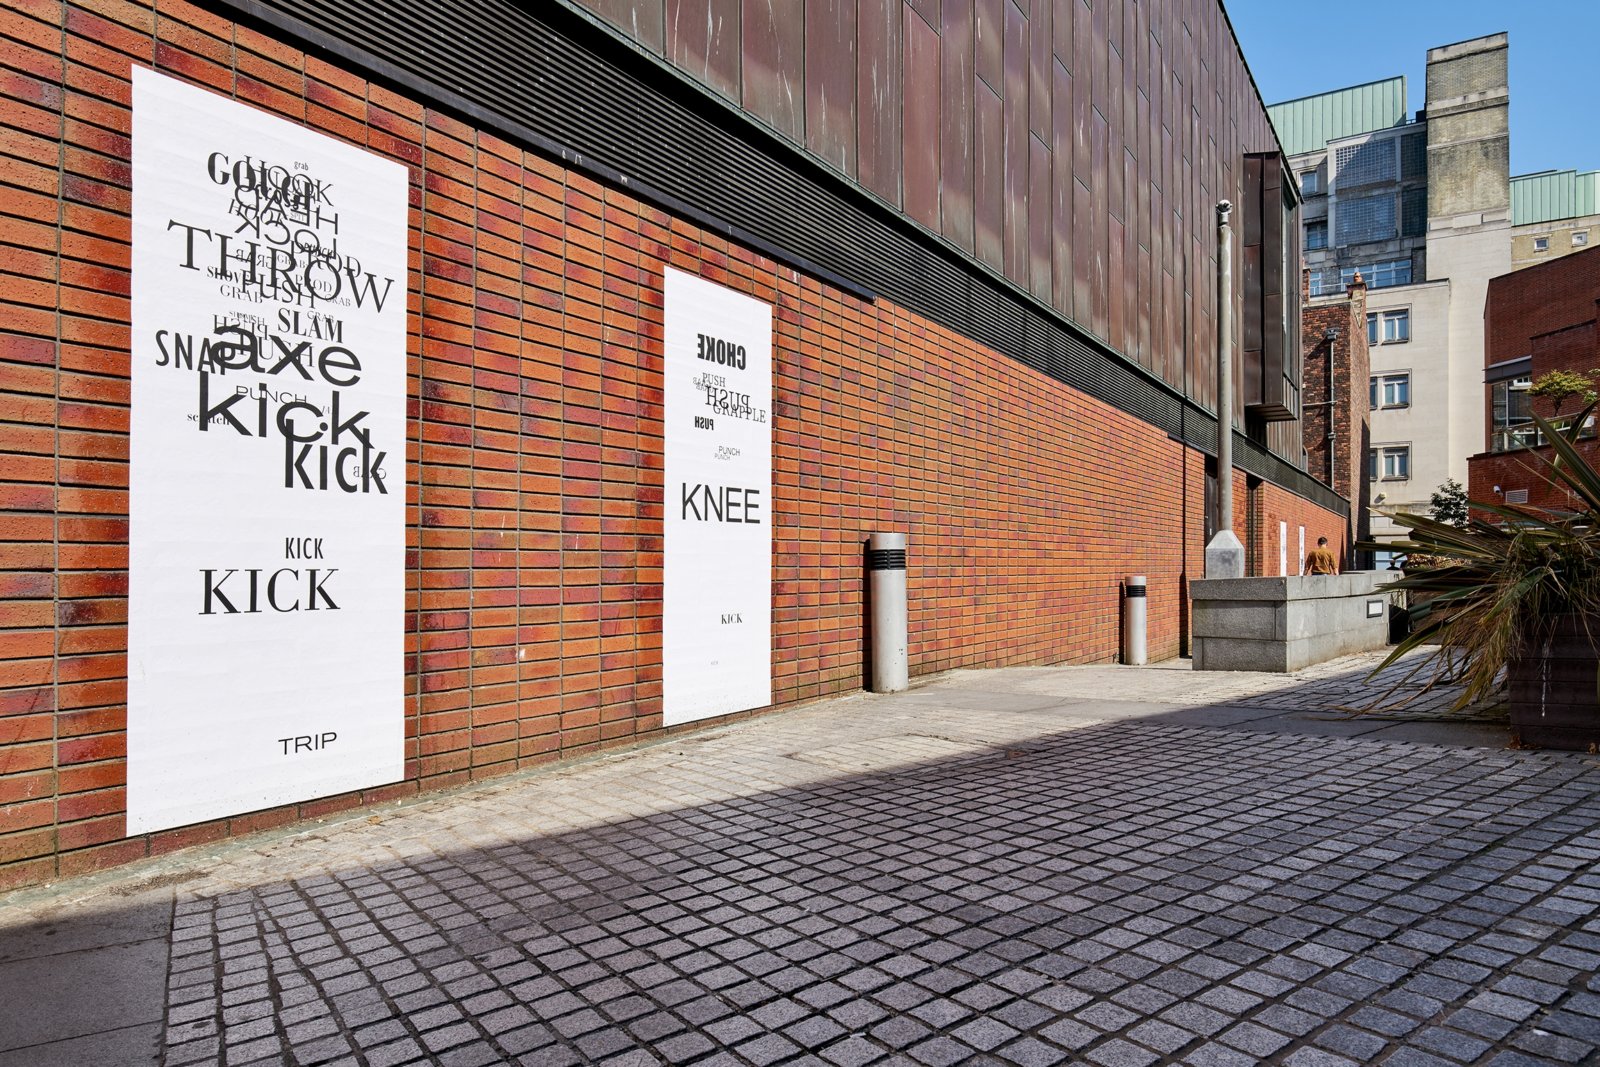 Janice Kerbel, Fight, 2018, screenprints on billboard paper, each 83 x 25 in. (210 x 64 cm). Installation view, Beautiful world, where are you?, Blundell Street, Liverpool, 2018